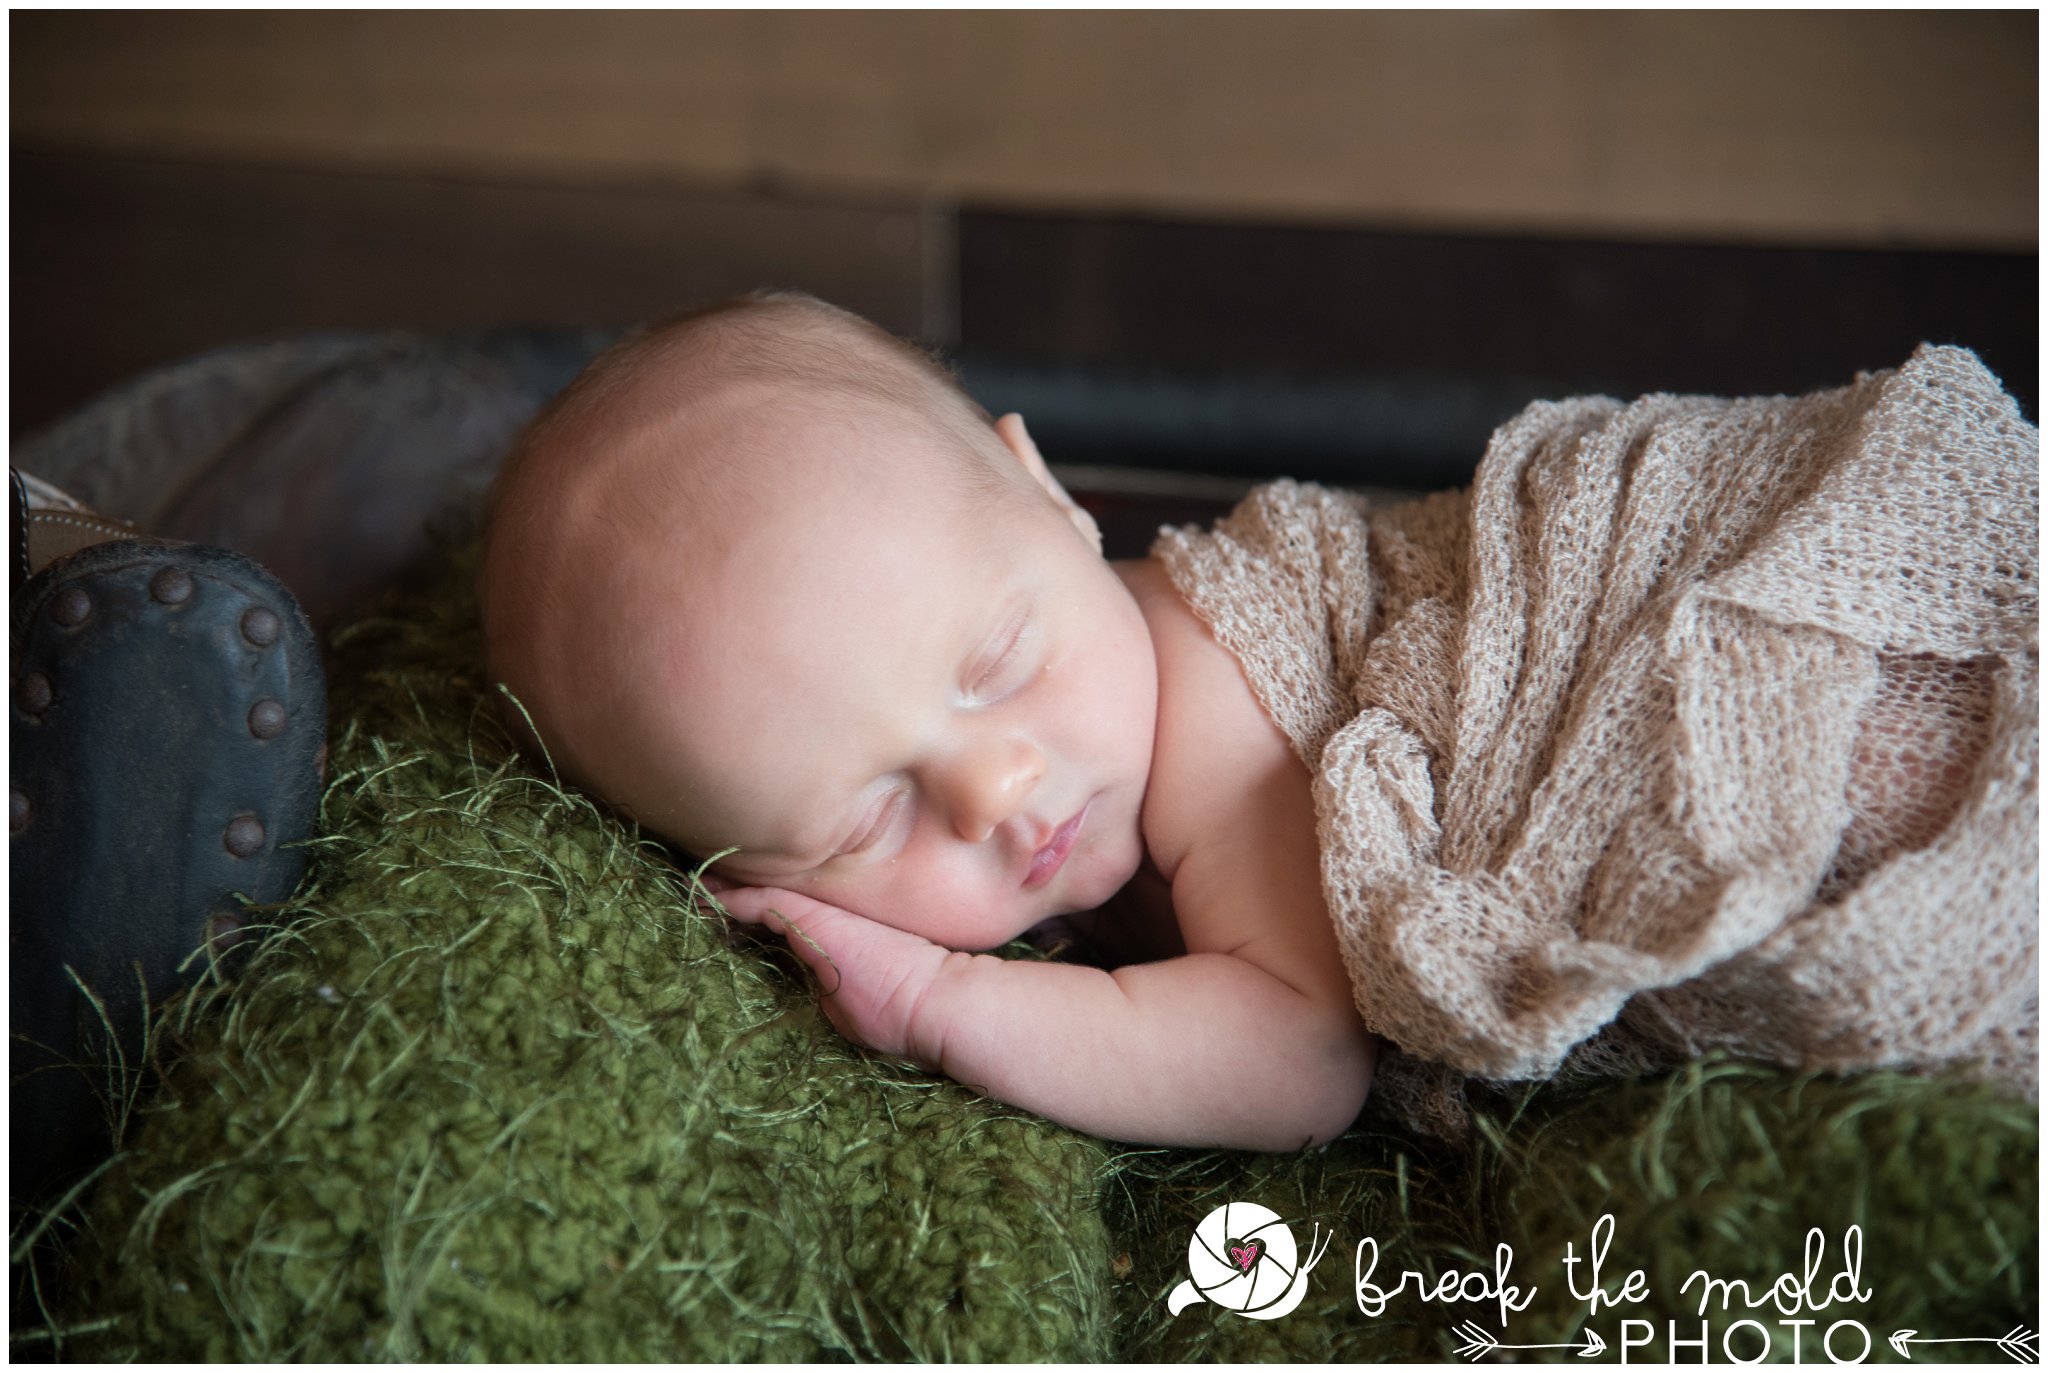 break-the-mold-photo-newborn-in-home-photos-nursery-lifestyle_1101.jpg